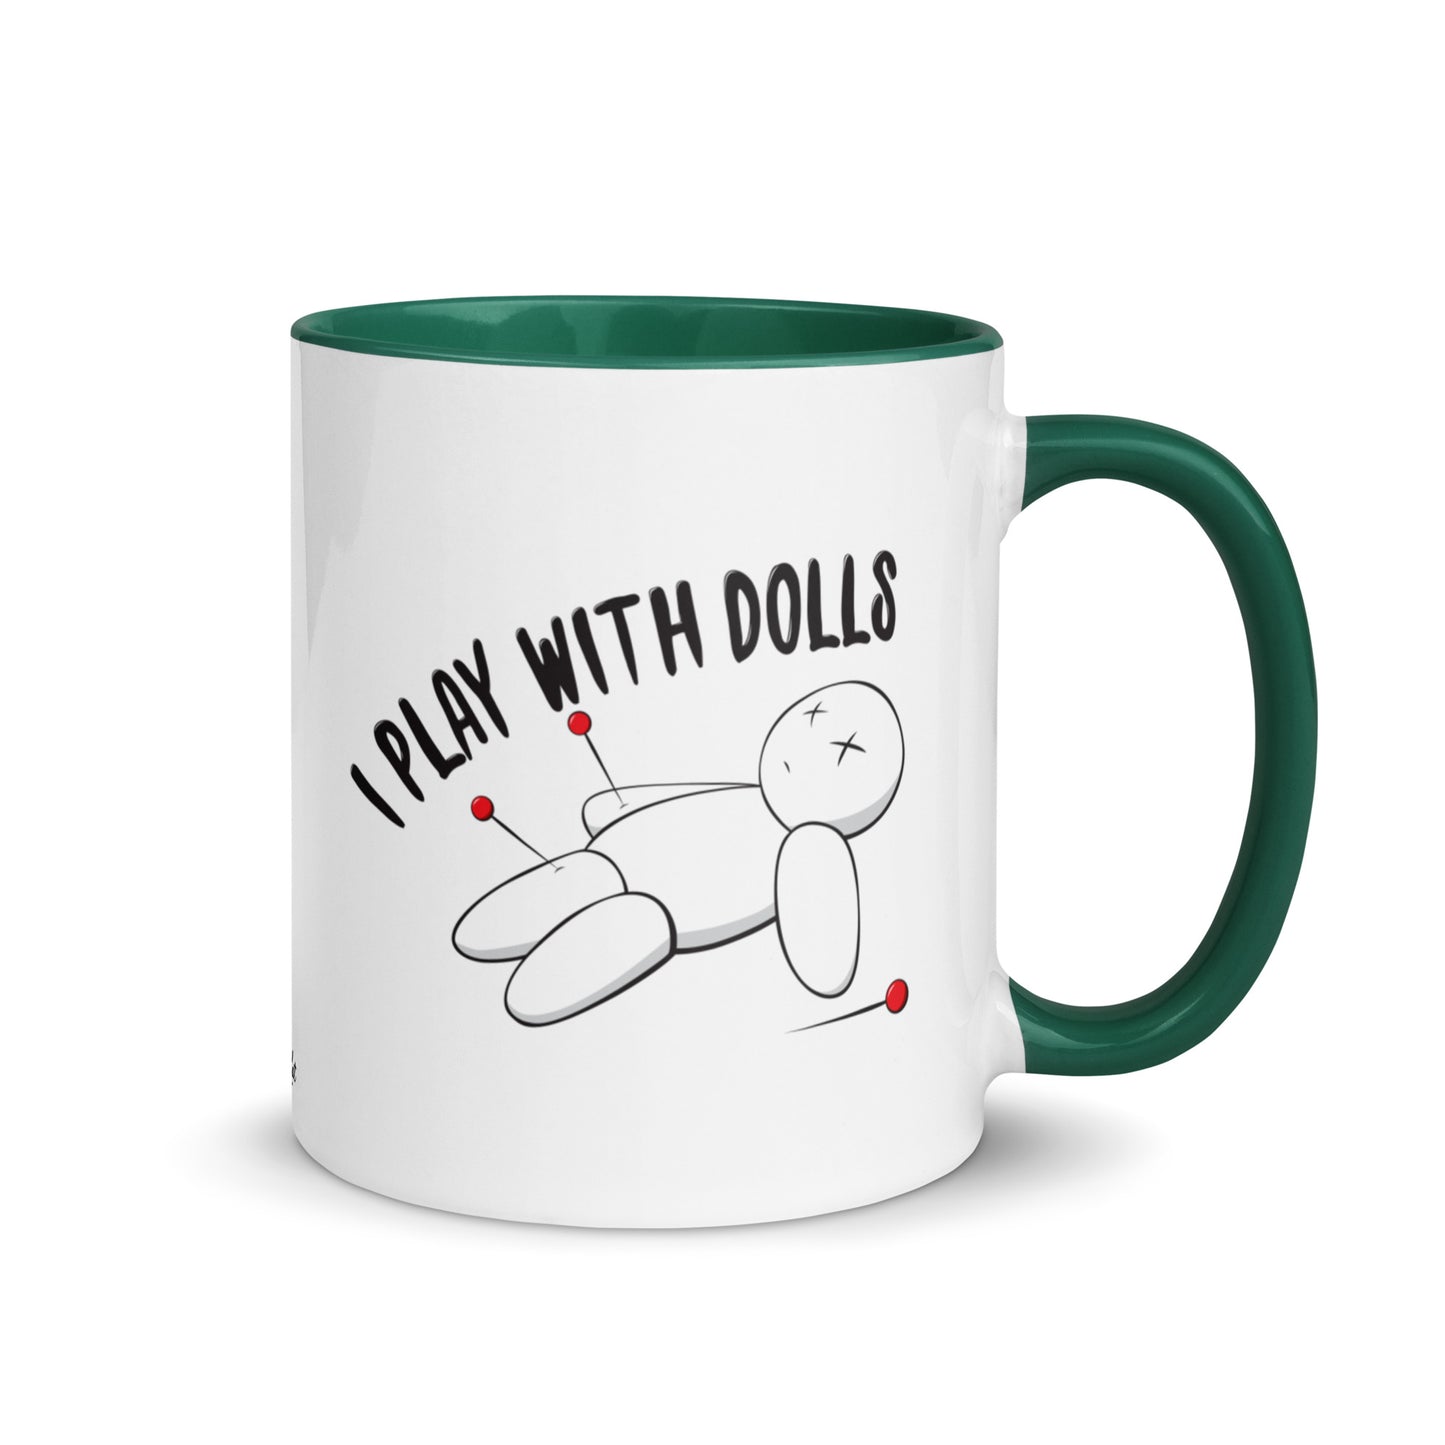 I Play With Dolls - Ceramic Mug